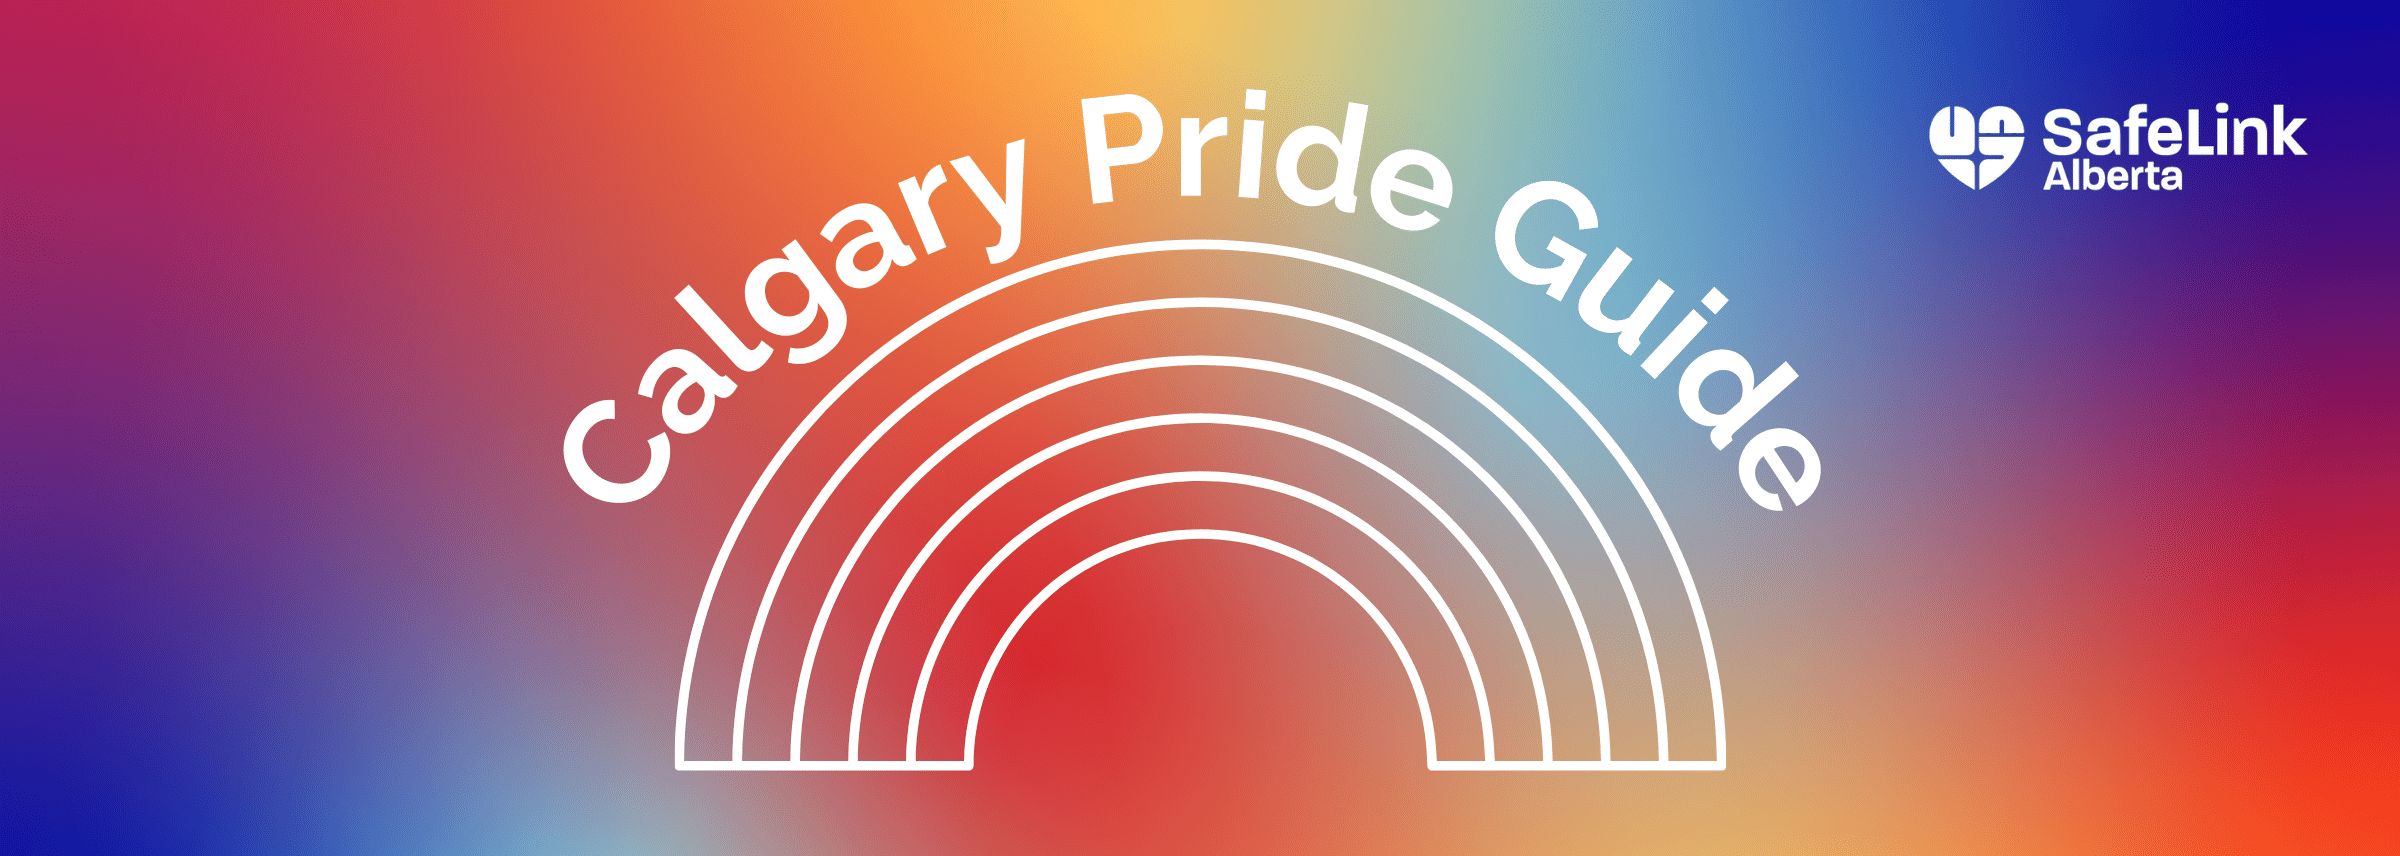 SafeLink Alberta Calgary Pride Guide